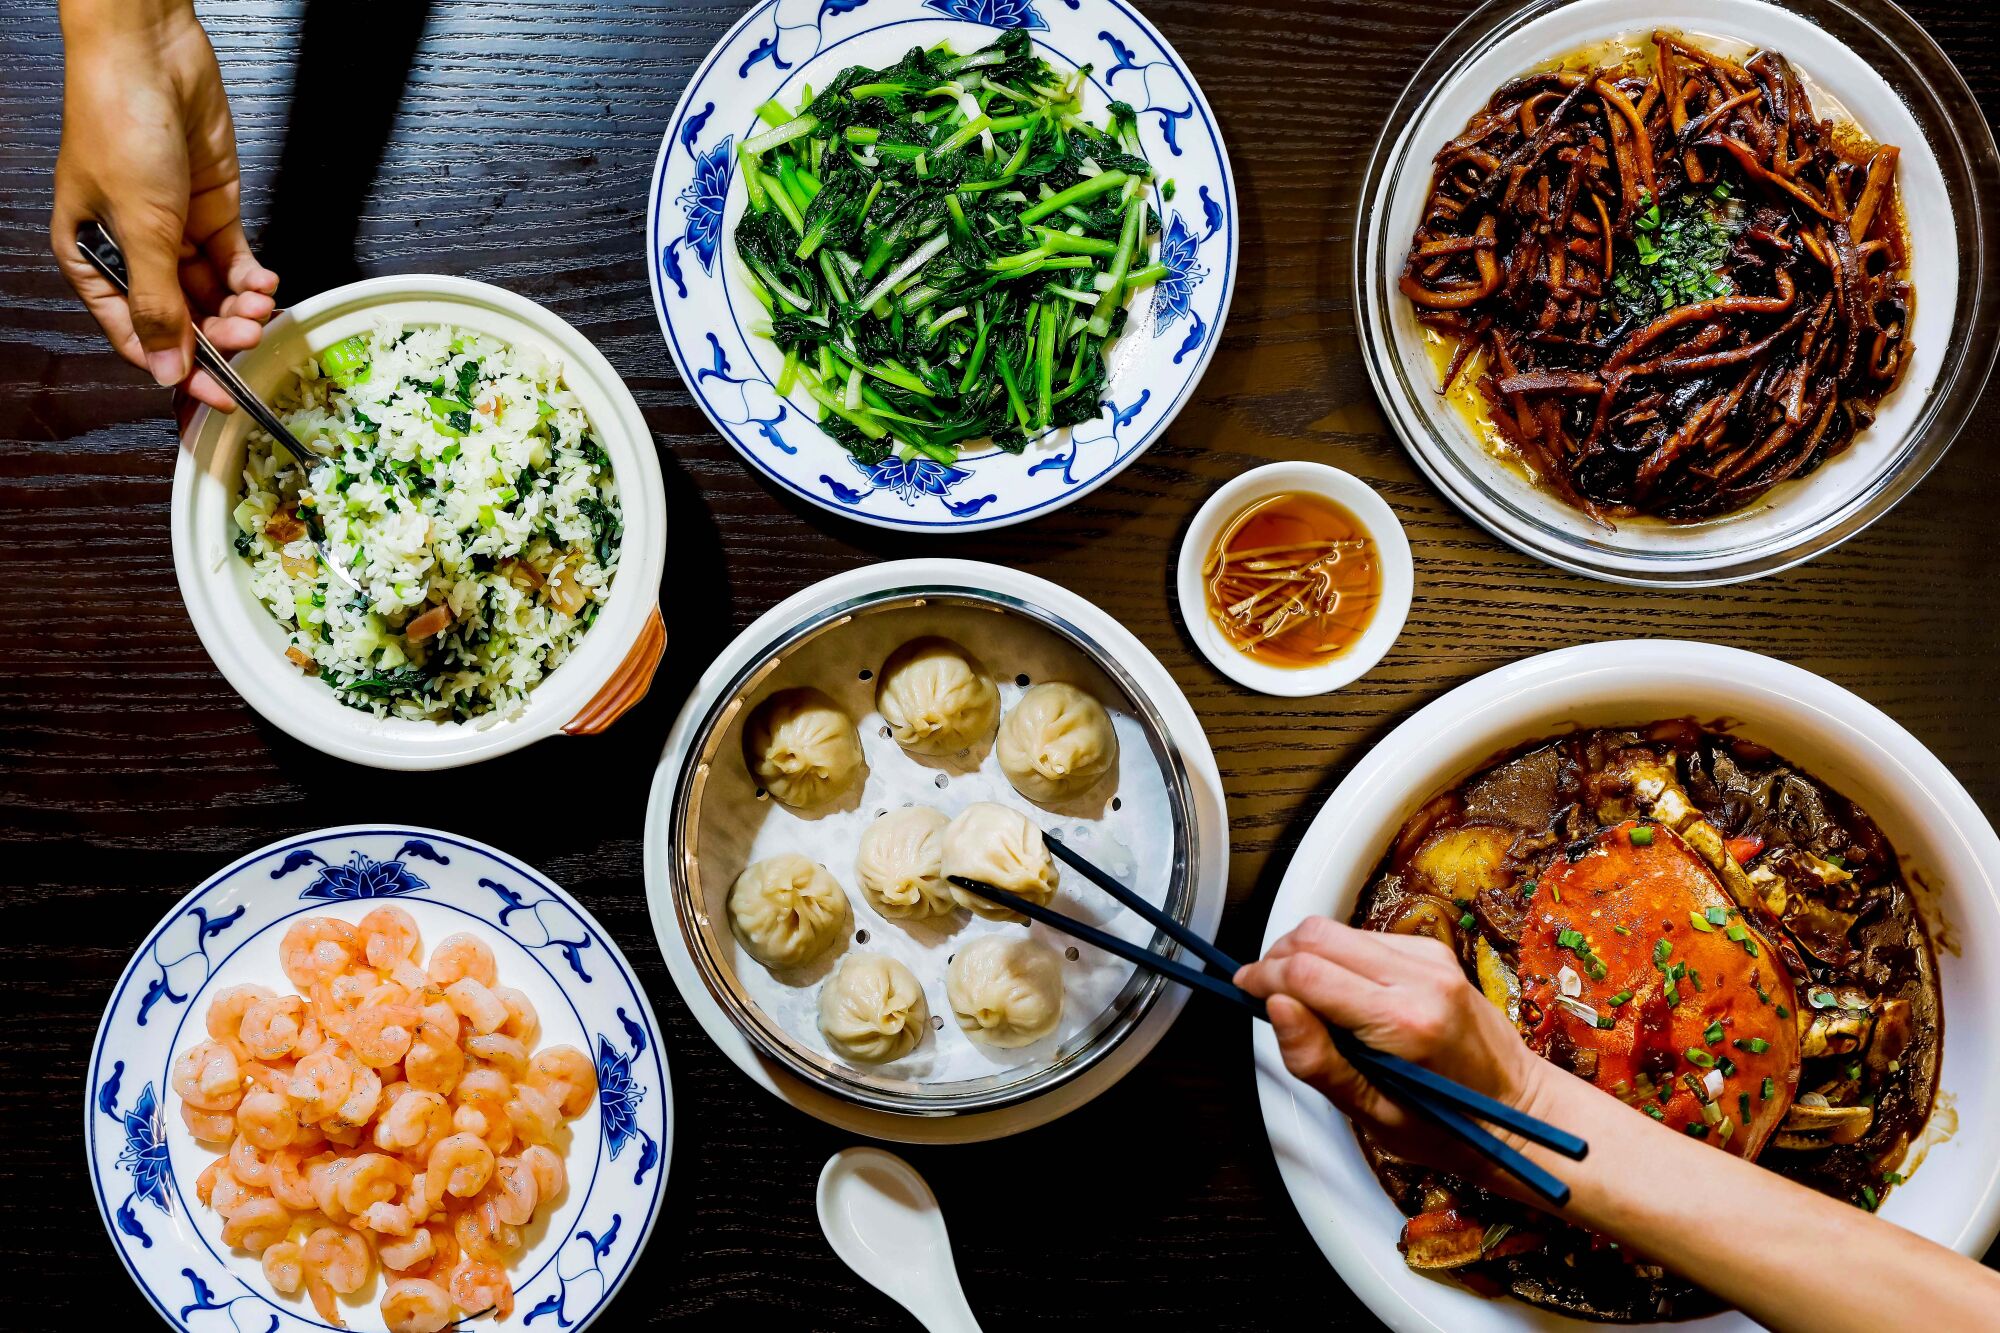 An assortment of dishes from WangJia restaurant.